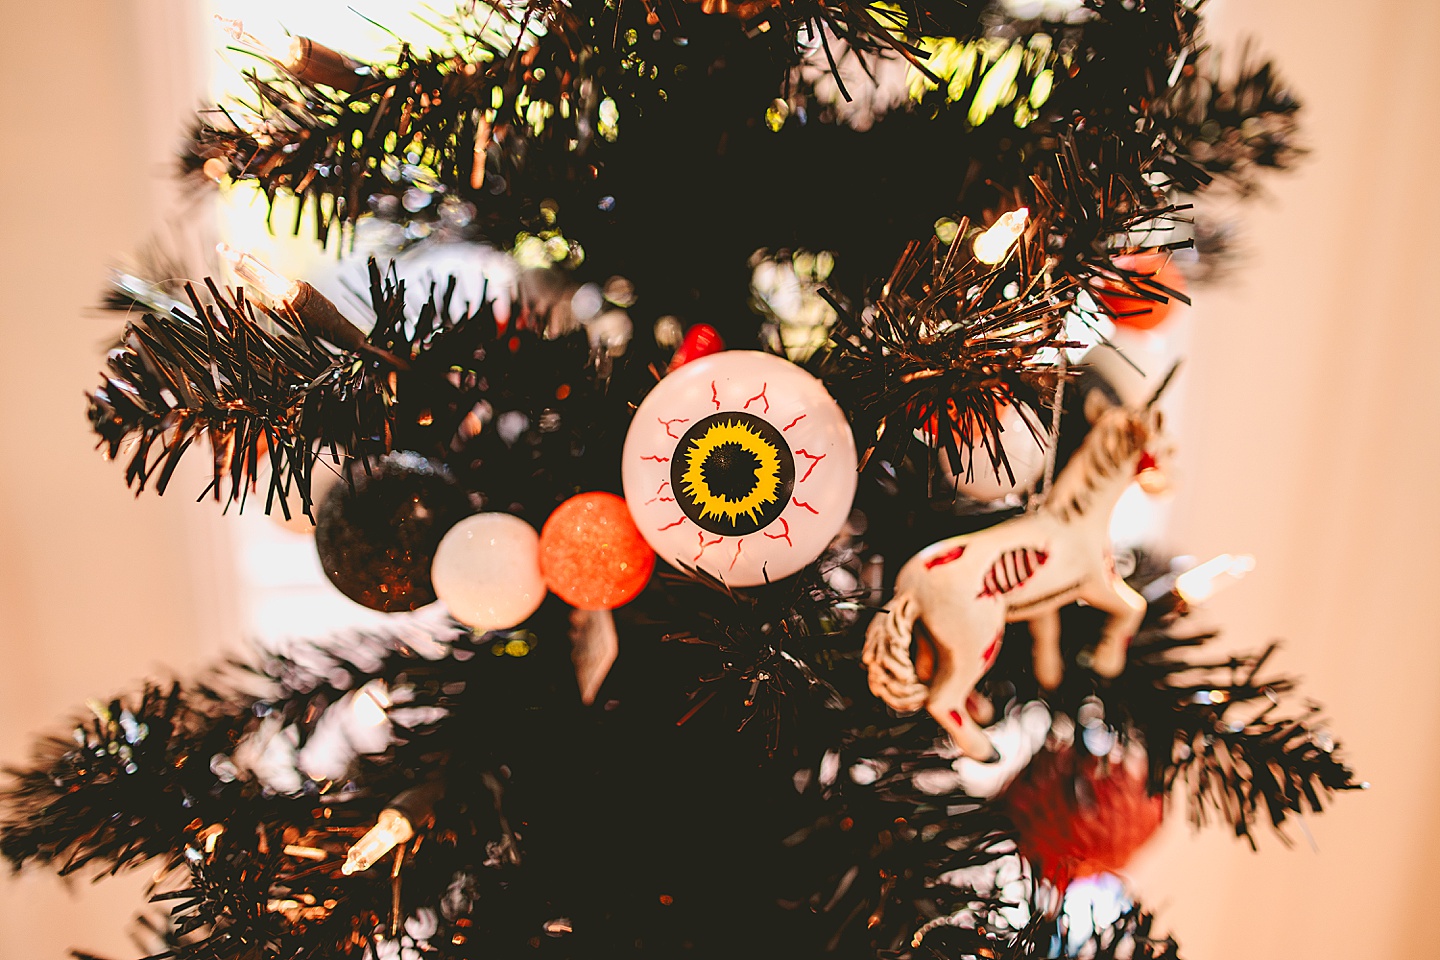 Eyeball horror ornament hangs on tree